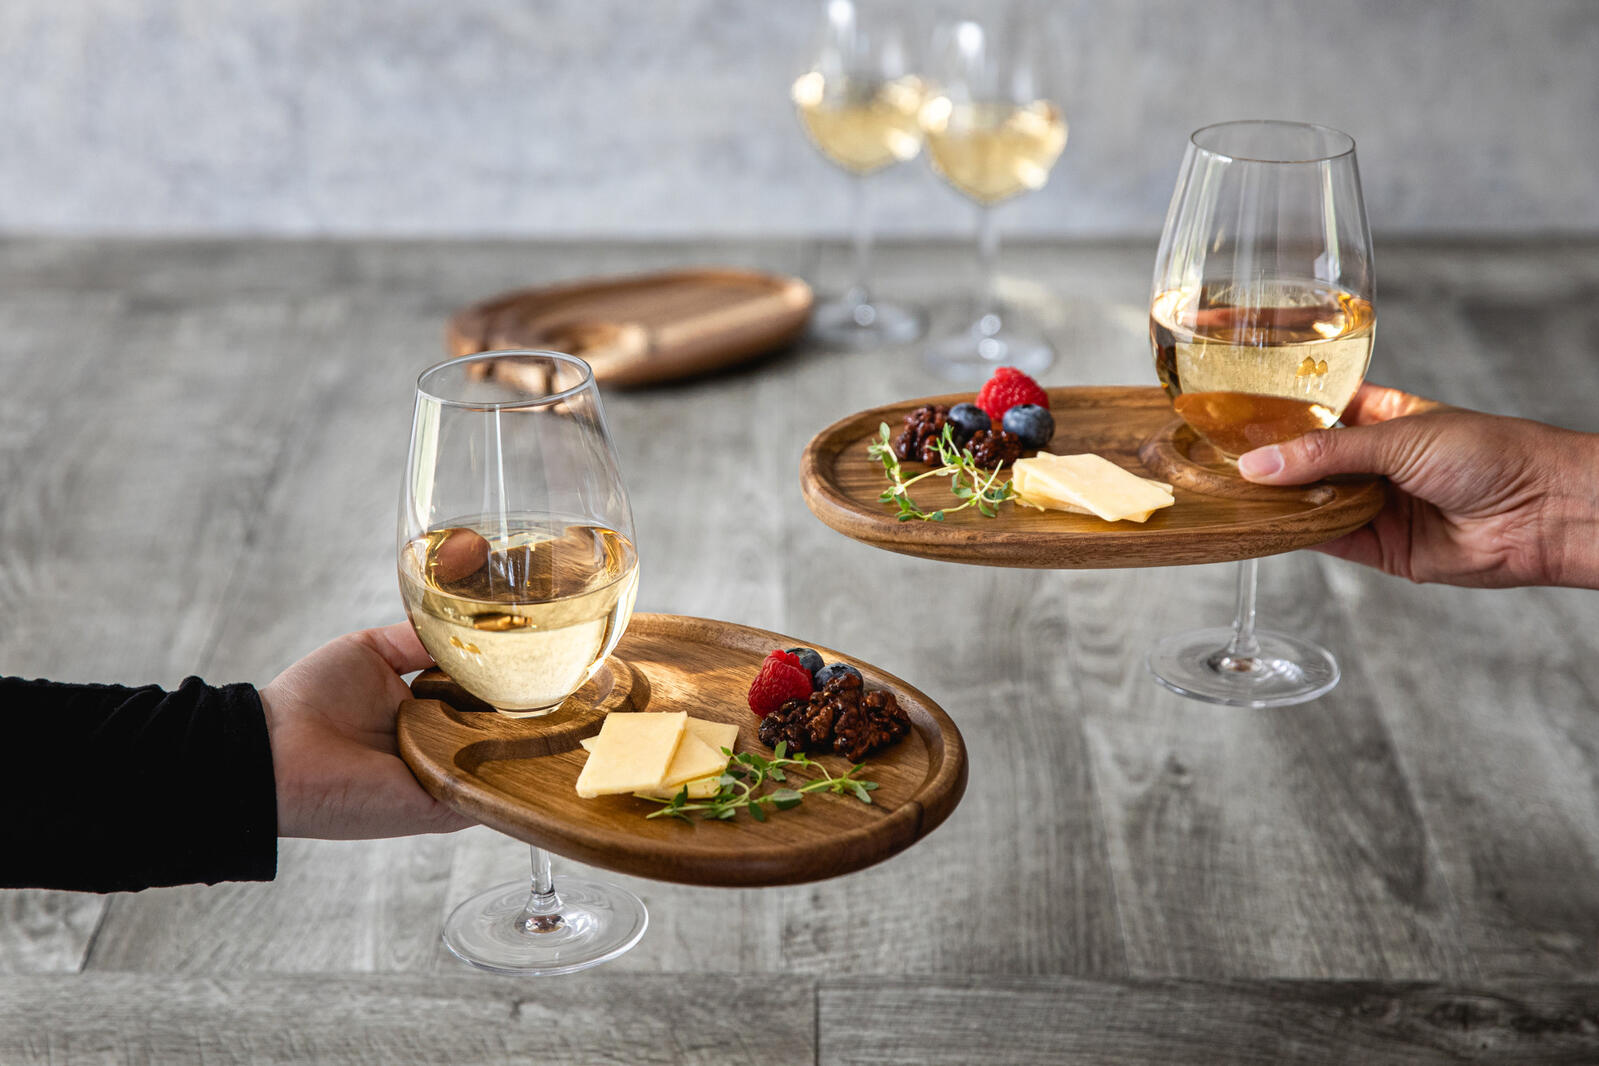 Wine Appetizer Plate Set